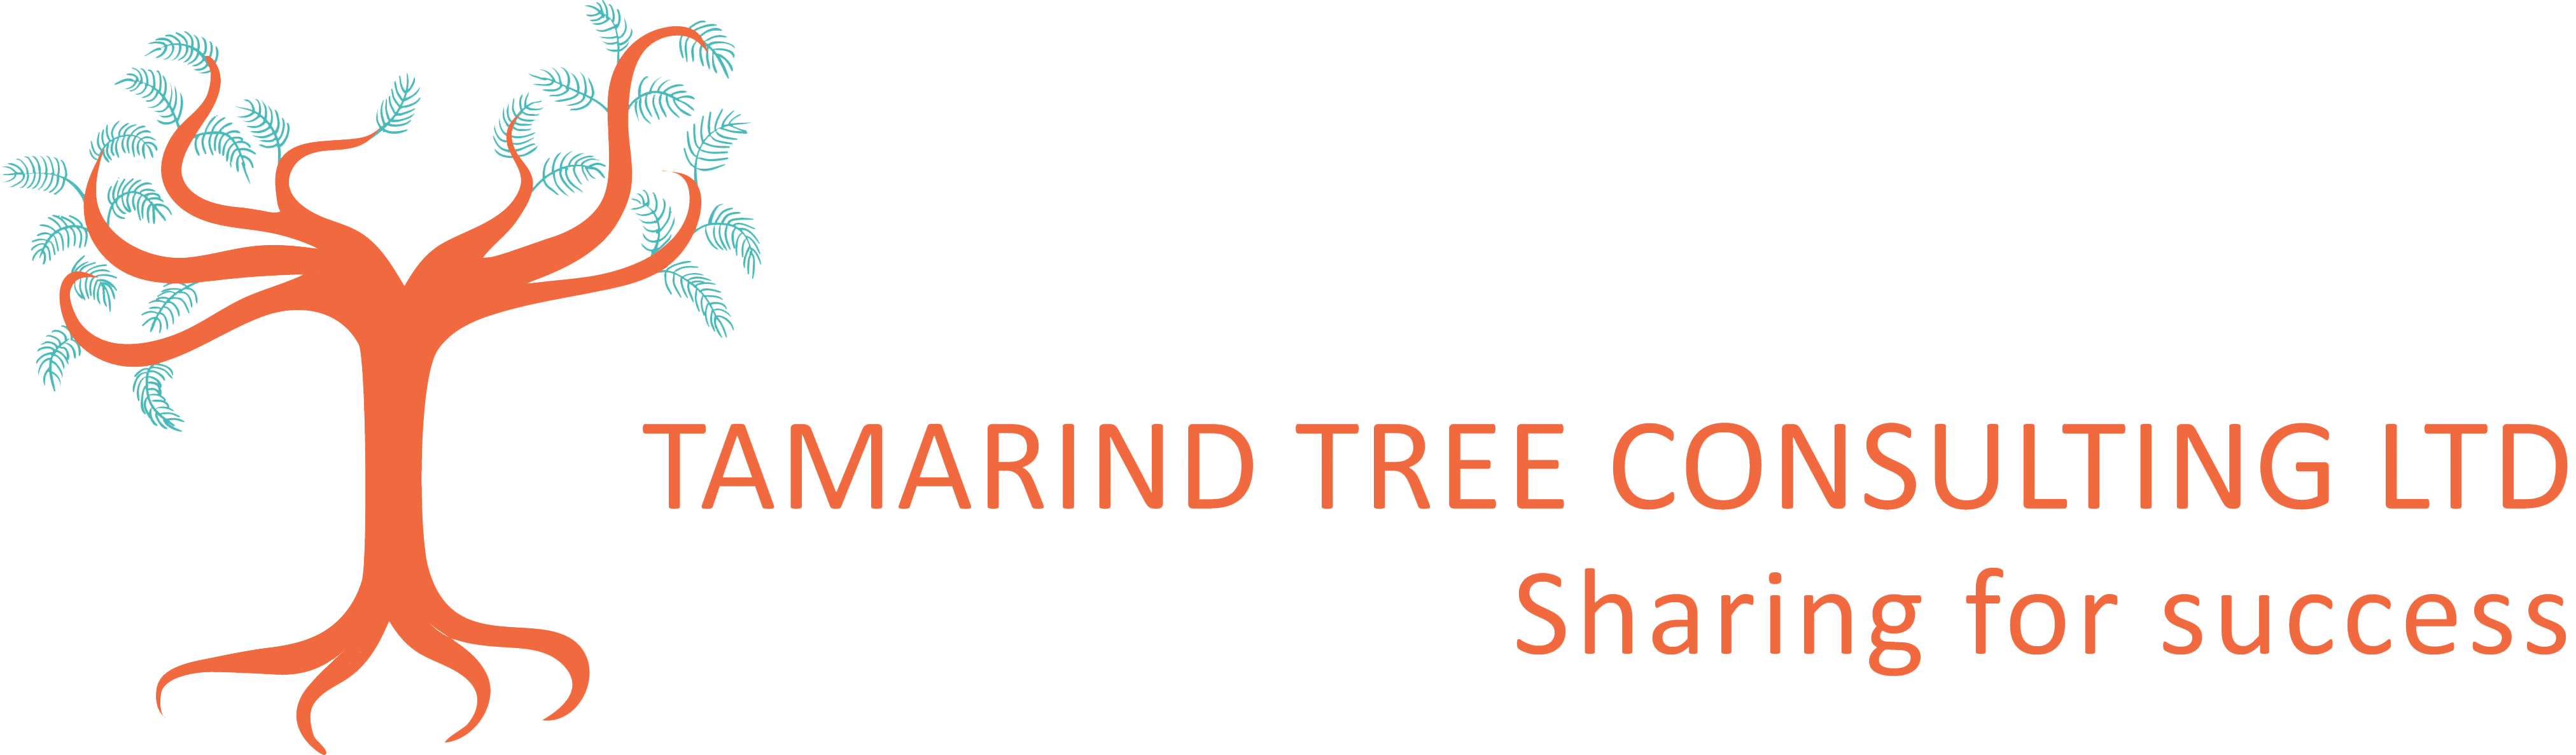 Tamarind Tree Consulting